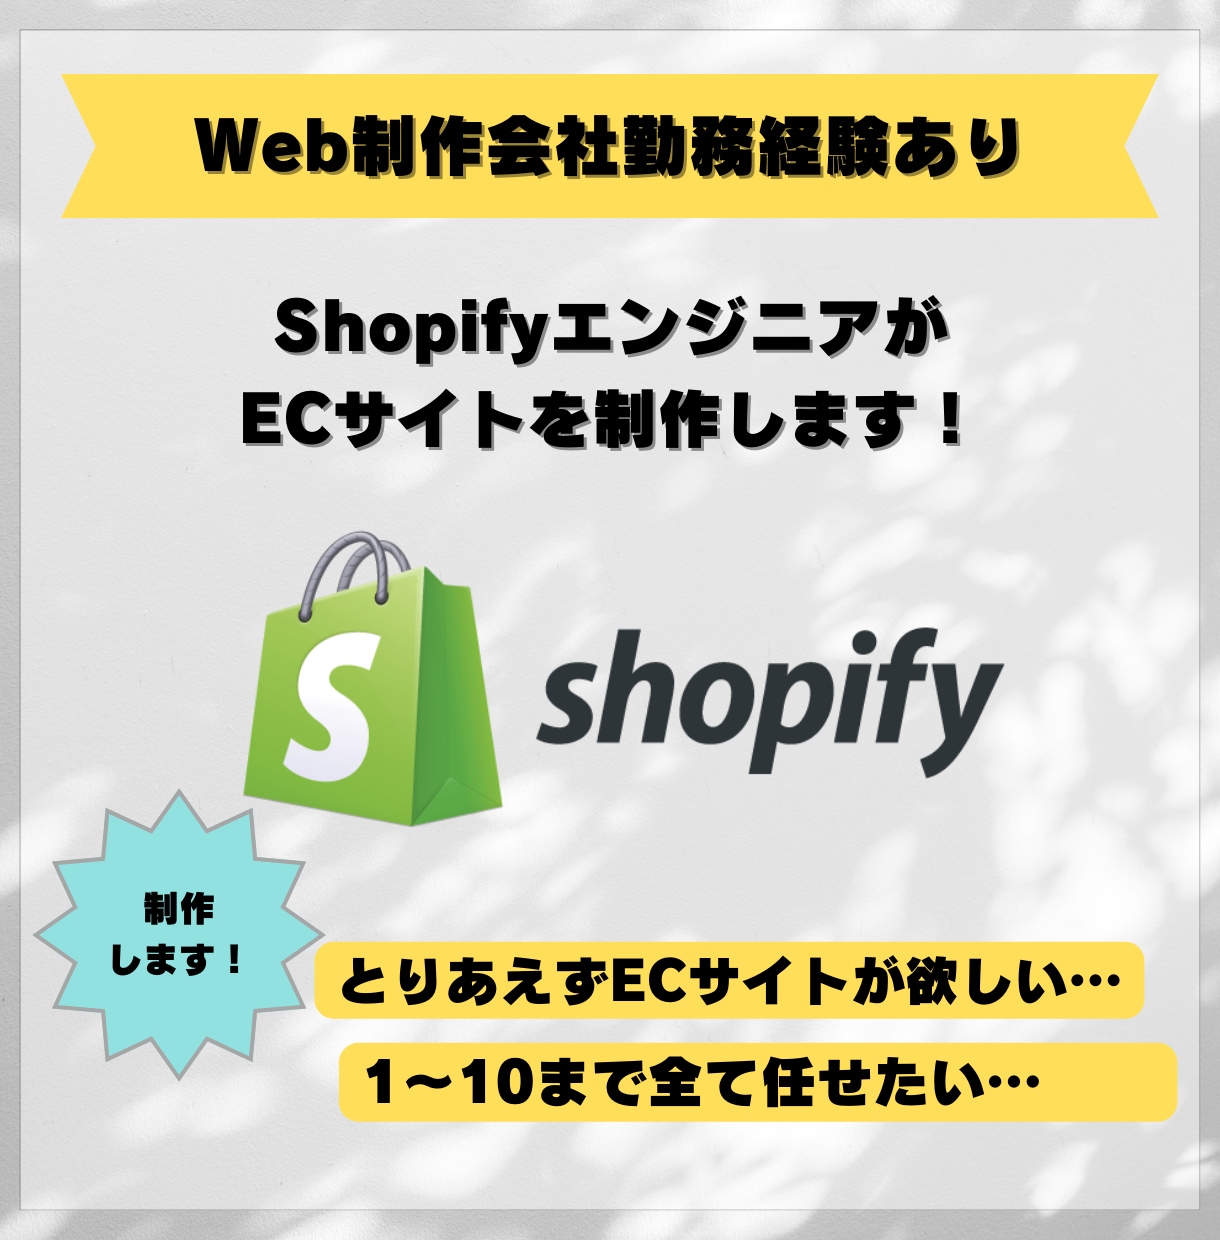 ShopifyでECサイトを制作します Shopify PartnerがECサイト制作いたします！ イメージ1